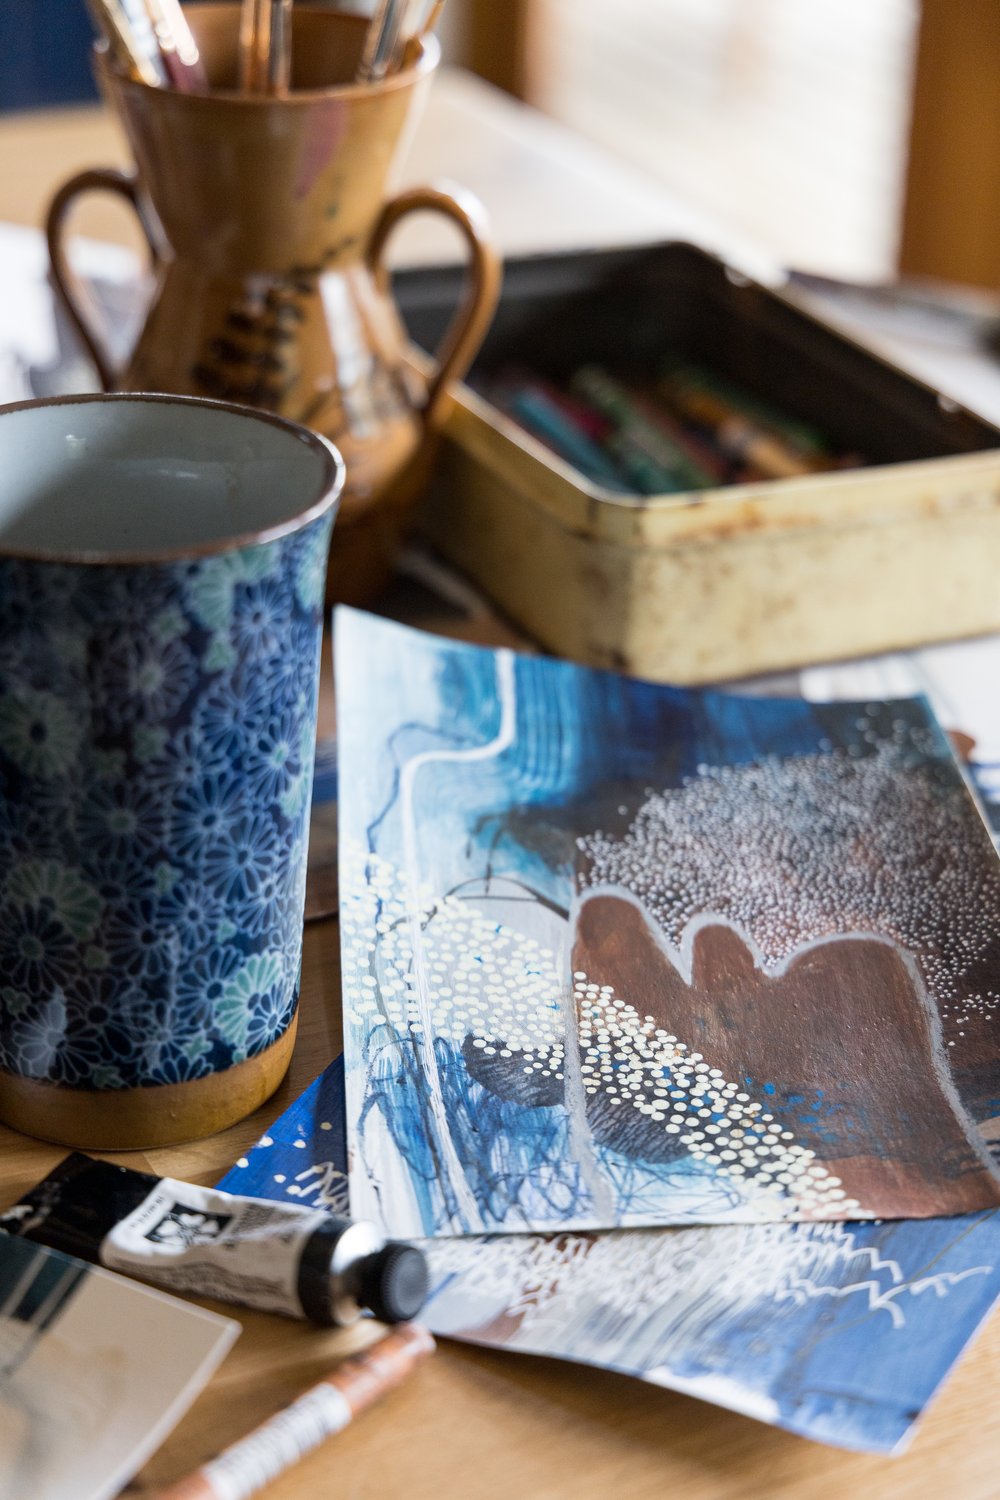  Close up photograph of abstract painting, art supplies, and tea mug.  